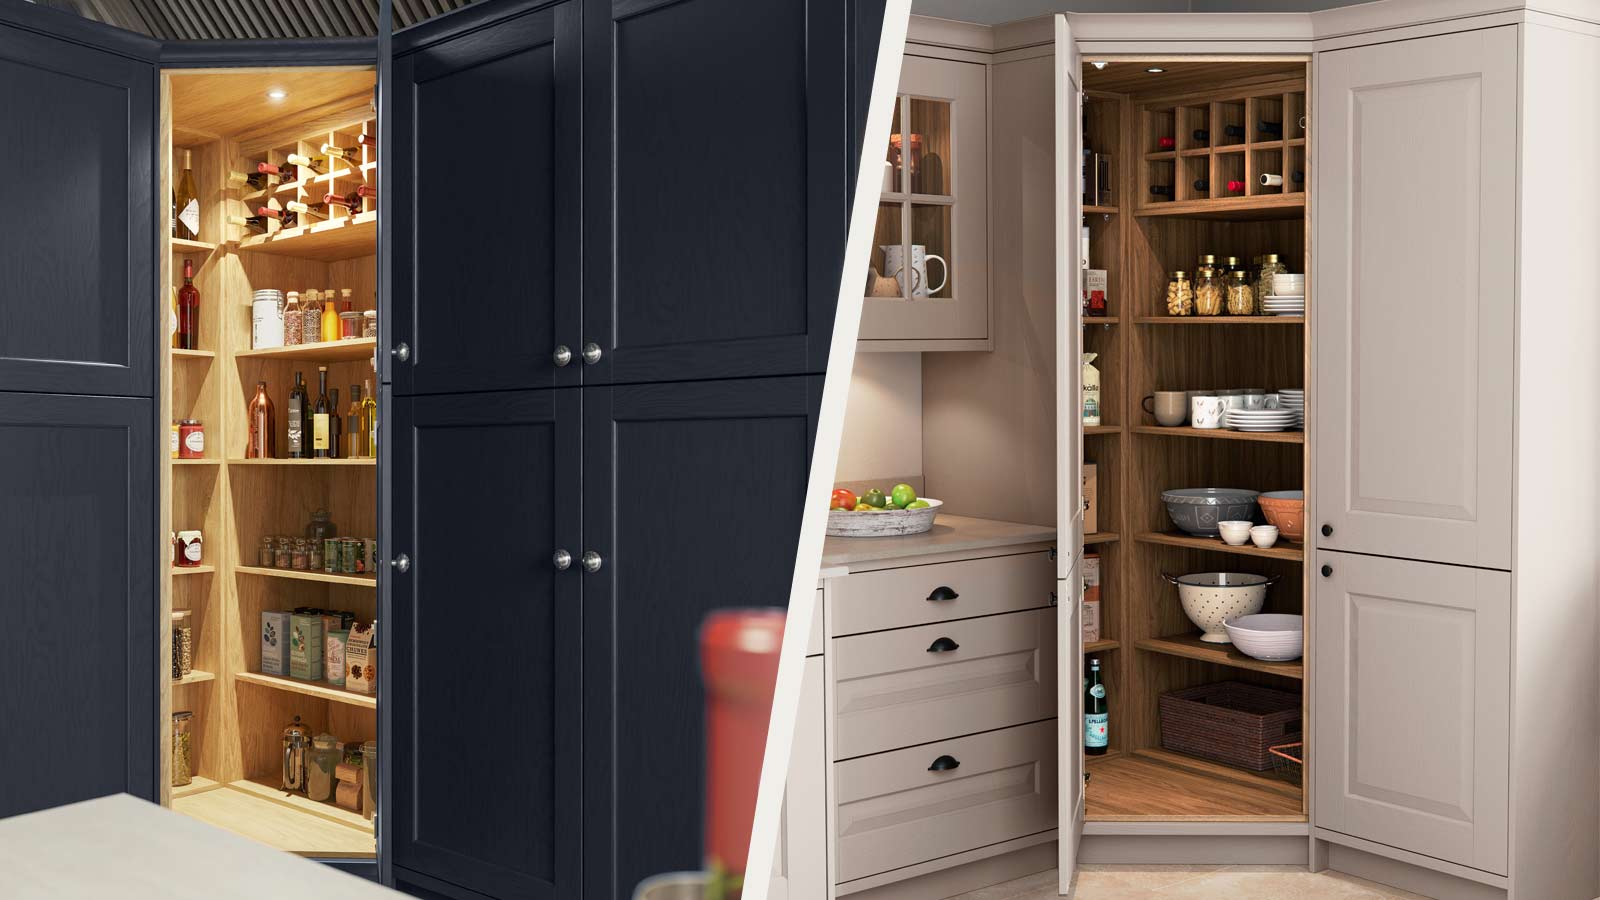 A corner kitchen pantry for kitchens that need a corner kitchen storage cabinet